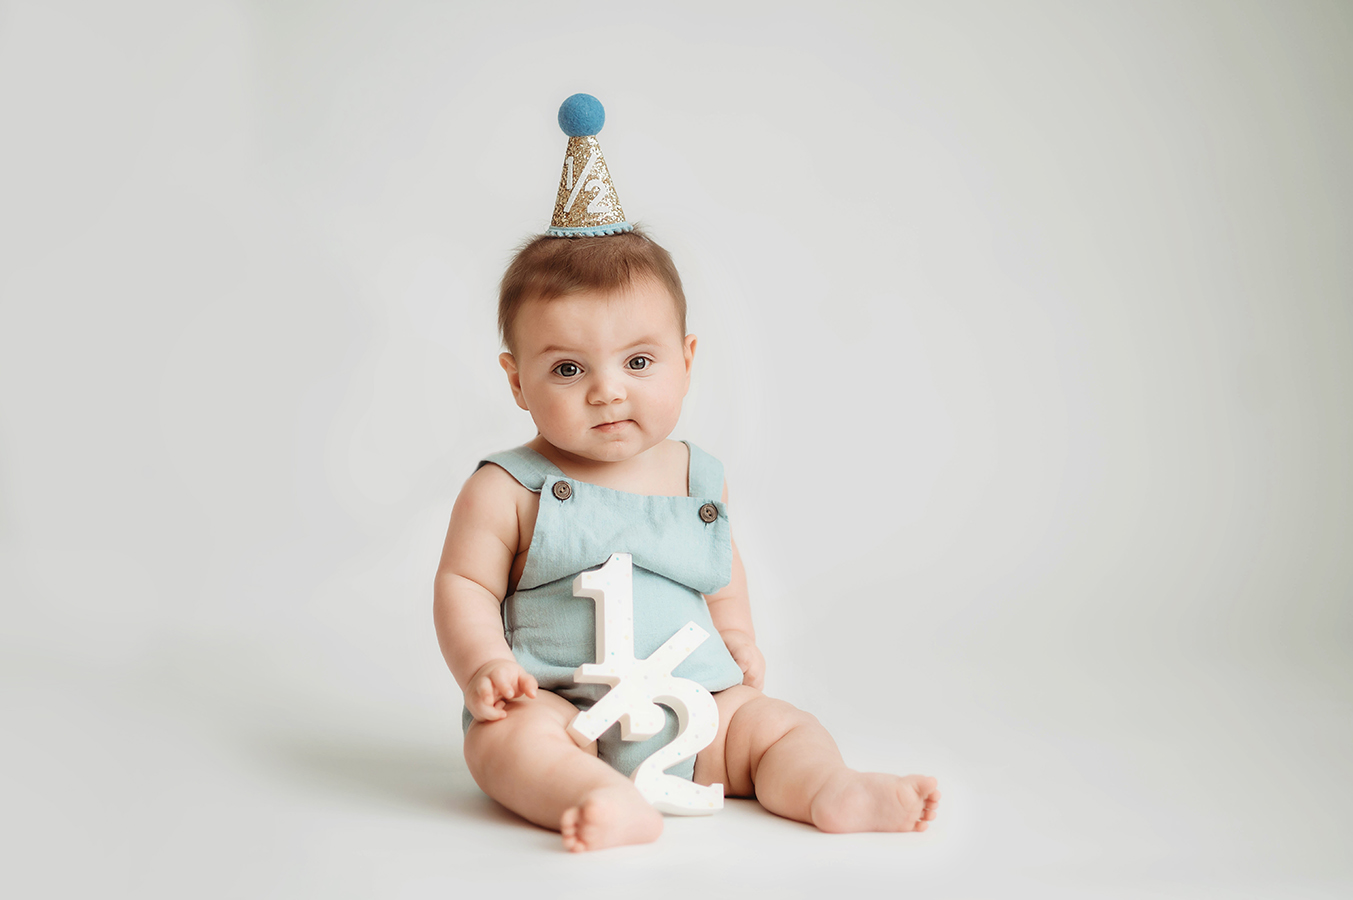 Baby poses for Birthday Cake Smash Portrait Session in Asheville, NC Photo Studio.